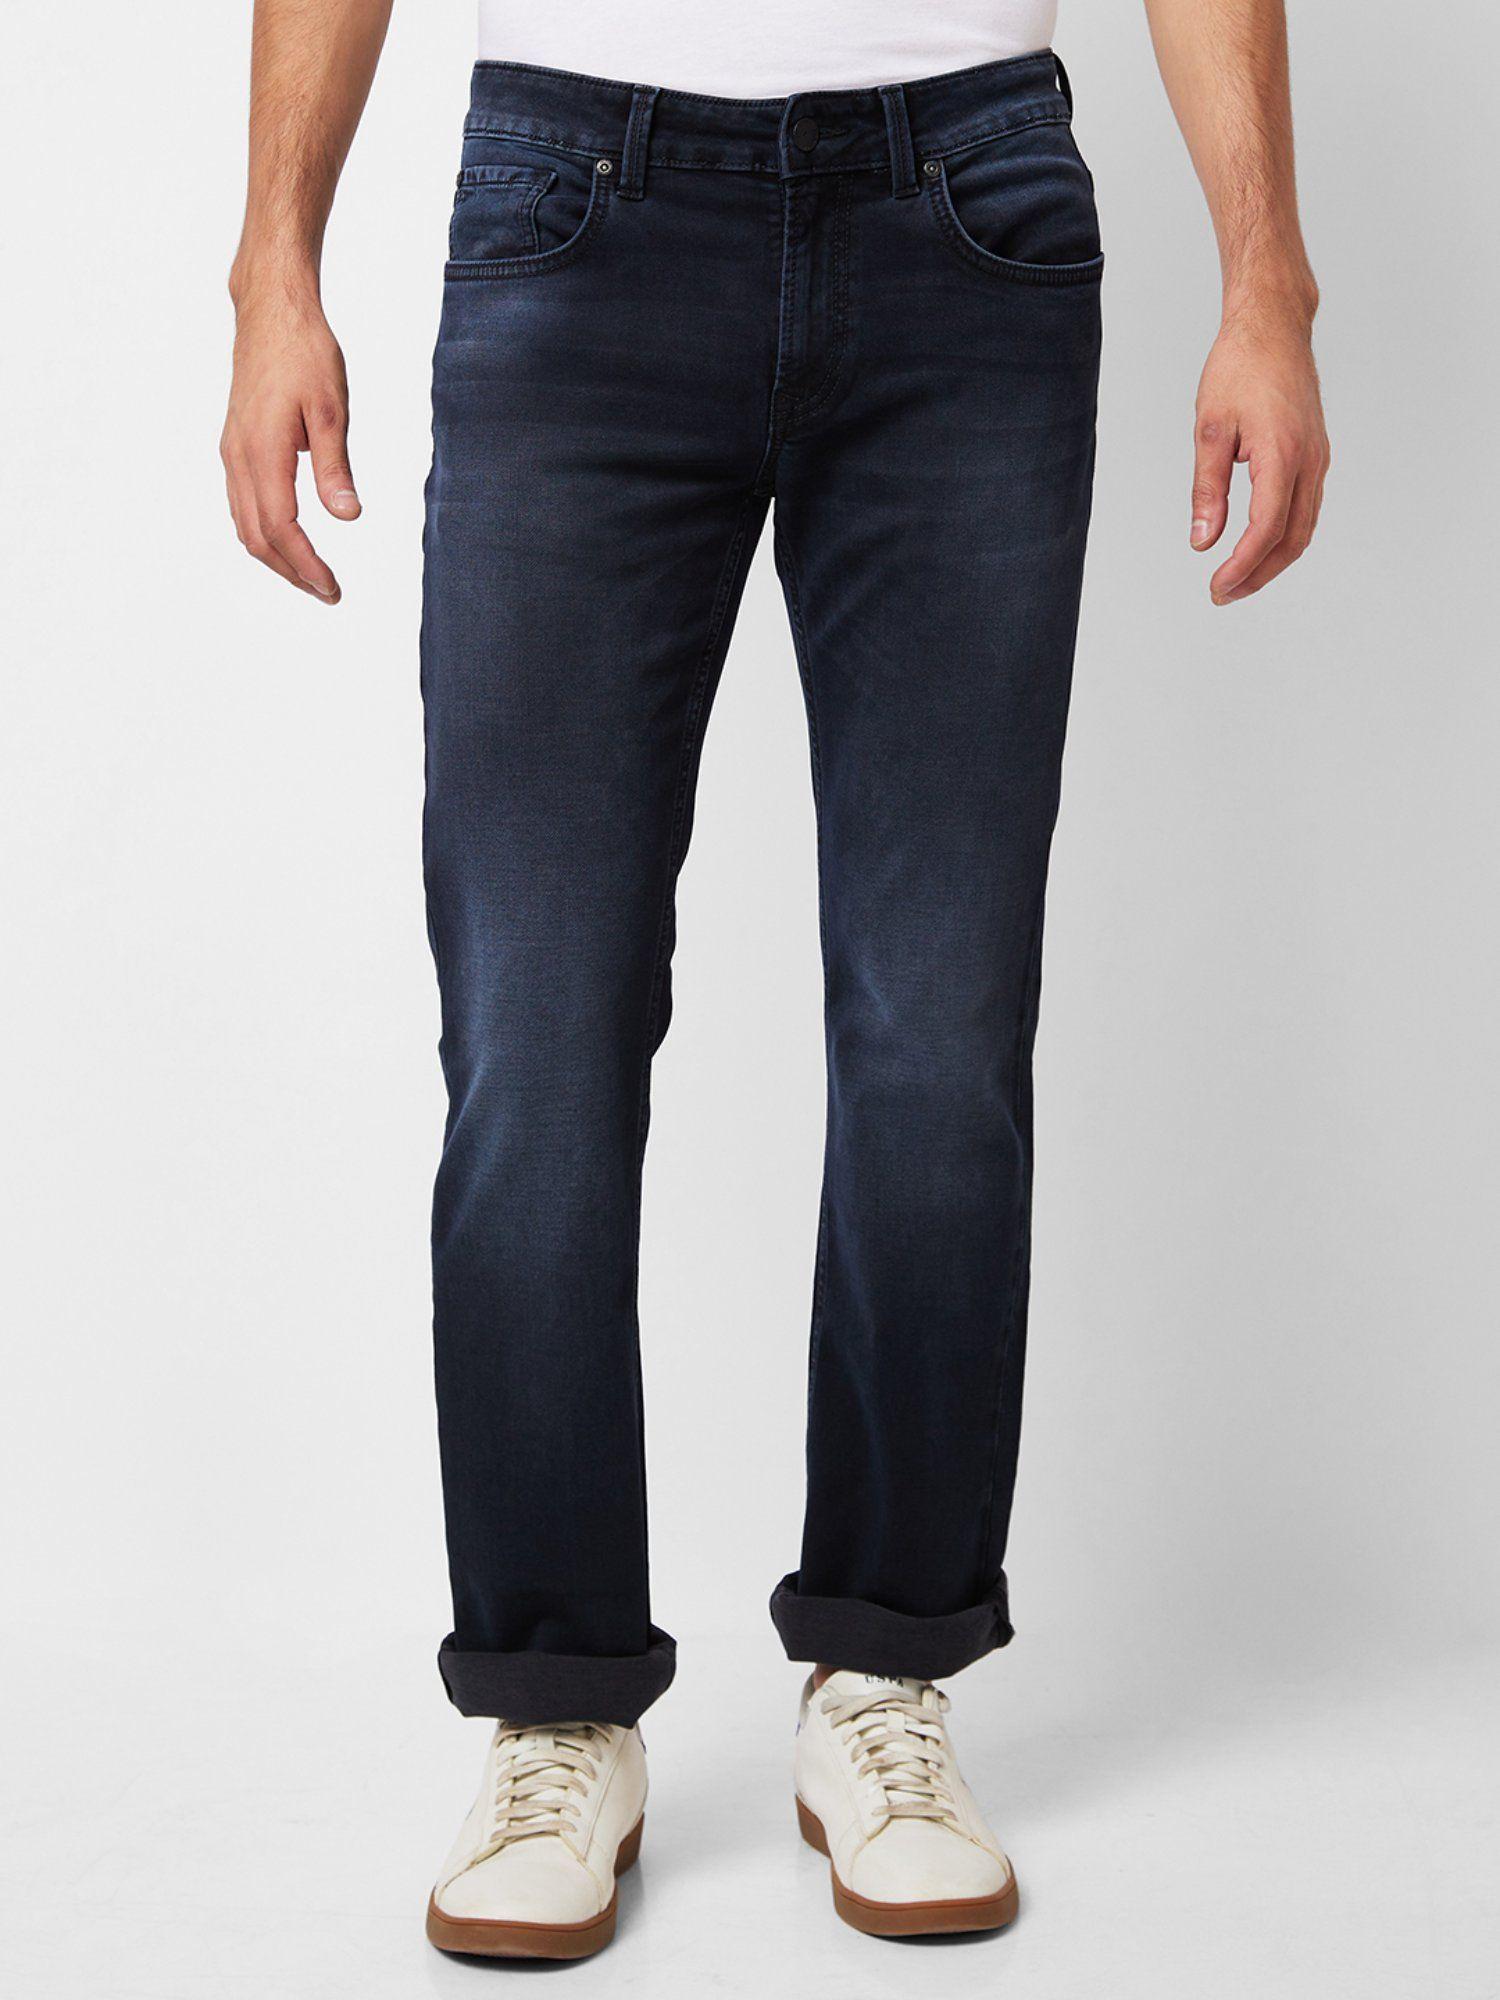 mid-rise-bootcut-fit-black-jeans-for-men